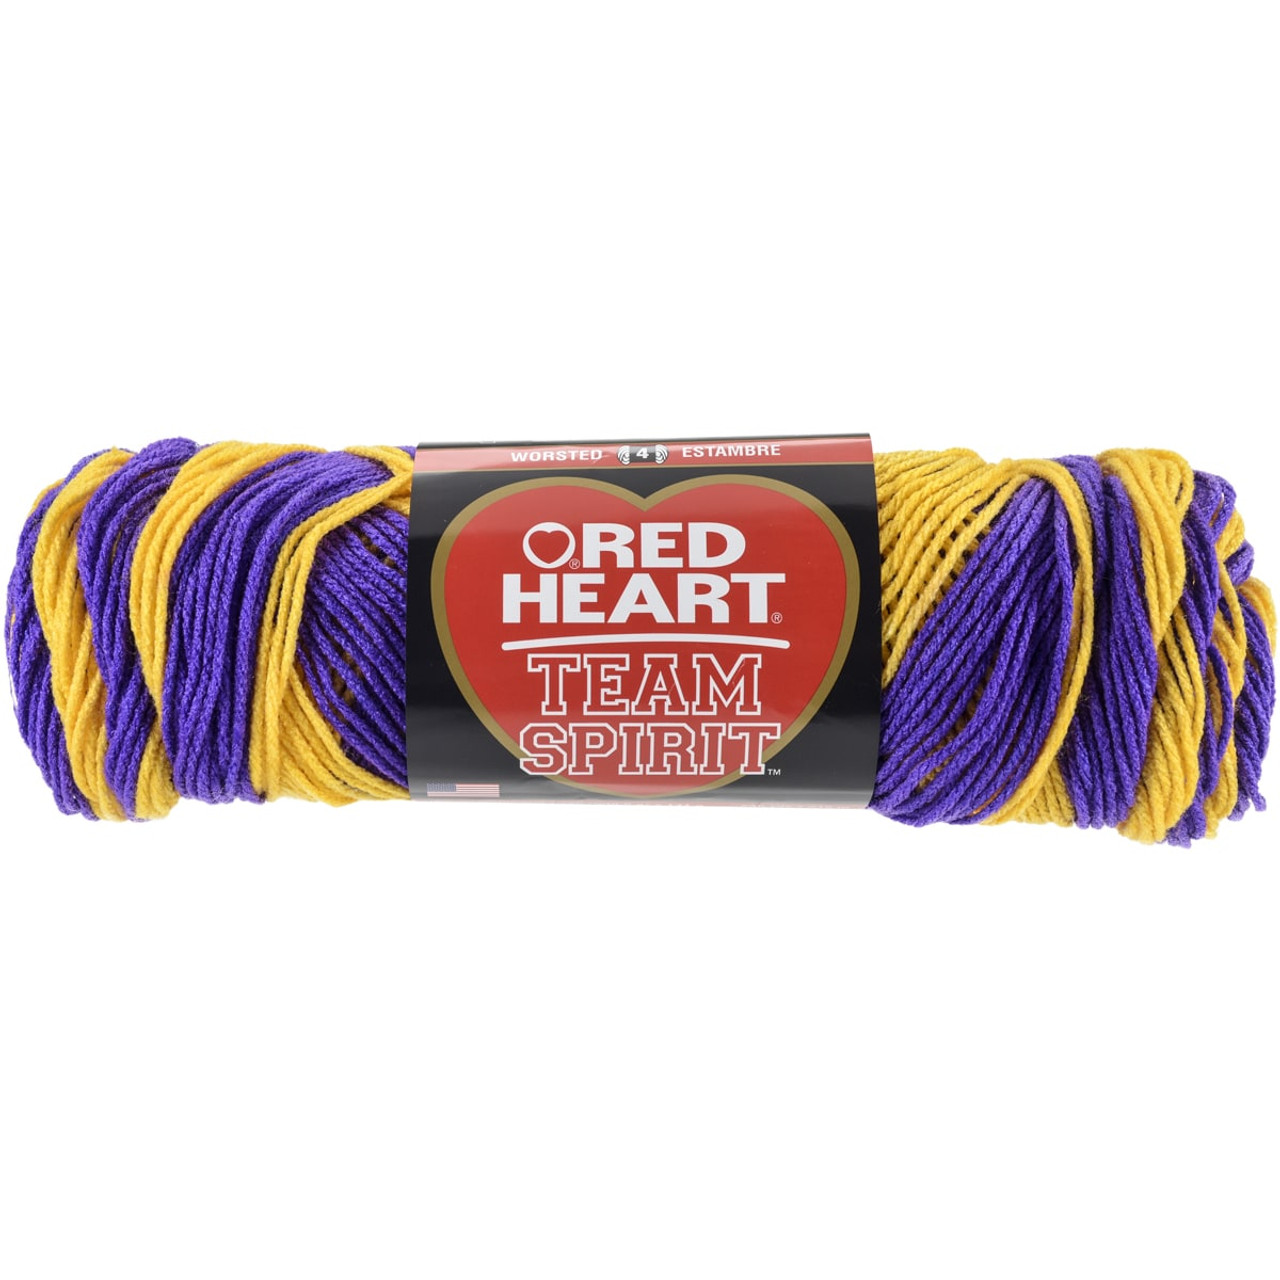 Red Heart Team Spirit Chunky Yarn, Purple and Gold